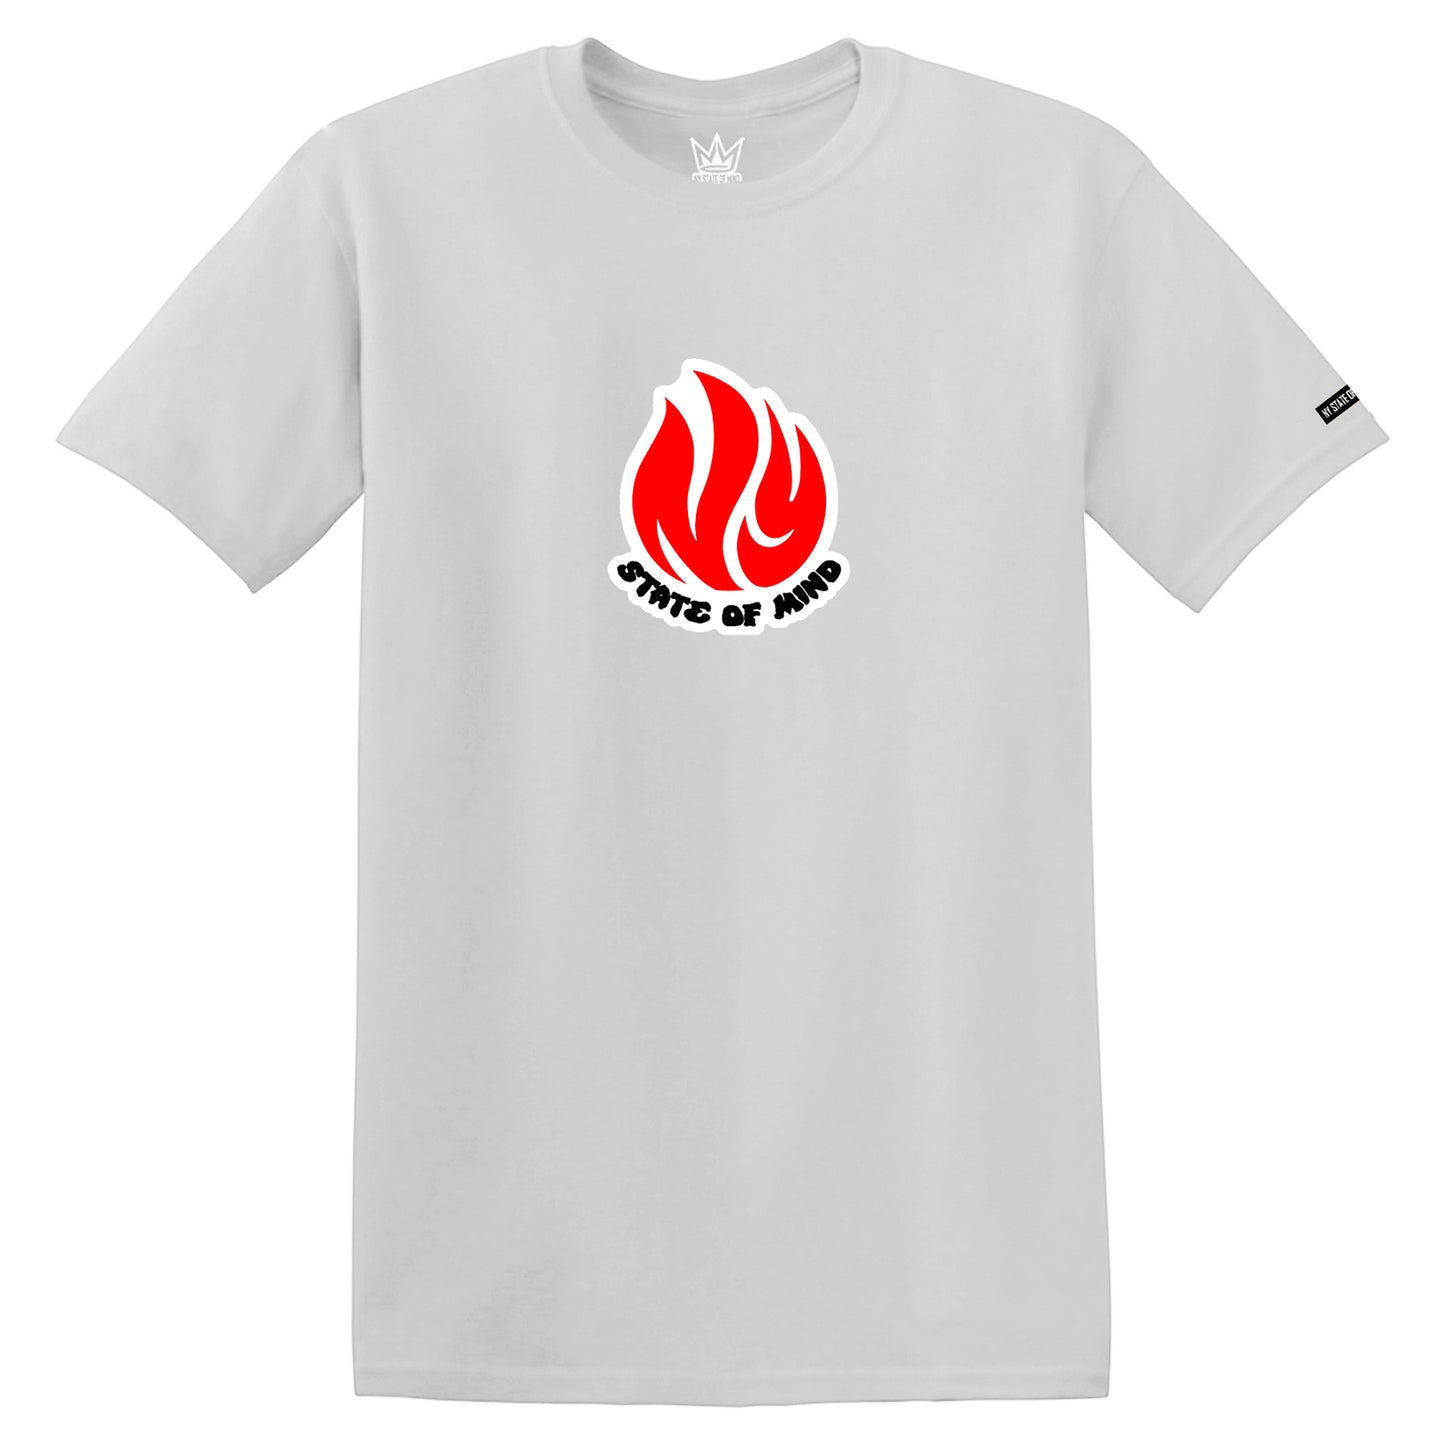 NY Flame T-Shirt